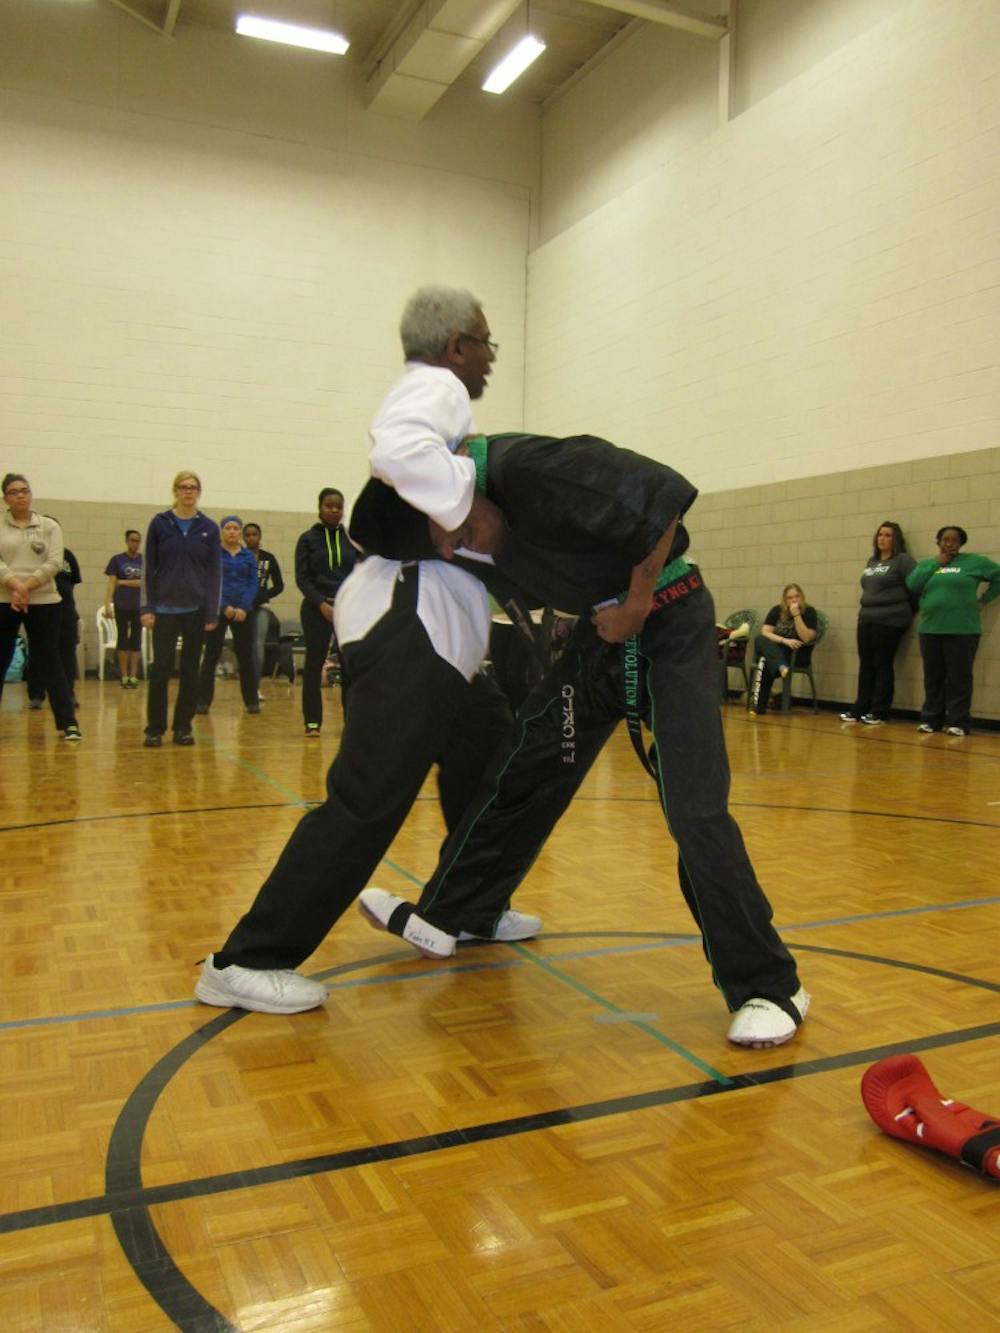 Martial arts master teaches self-defense